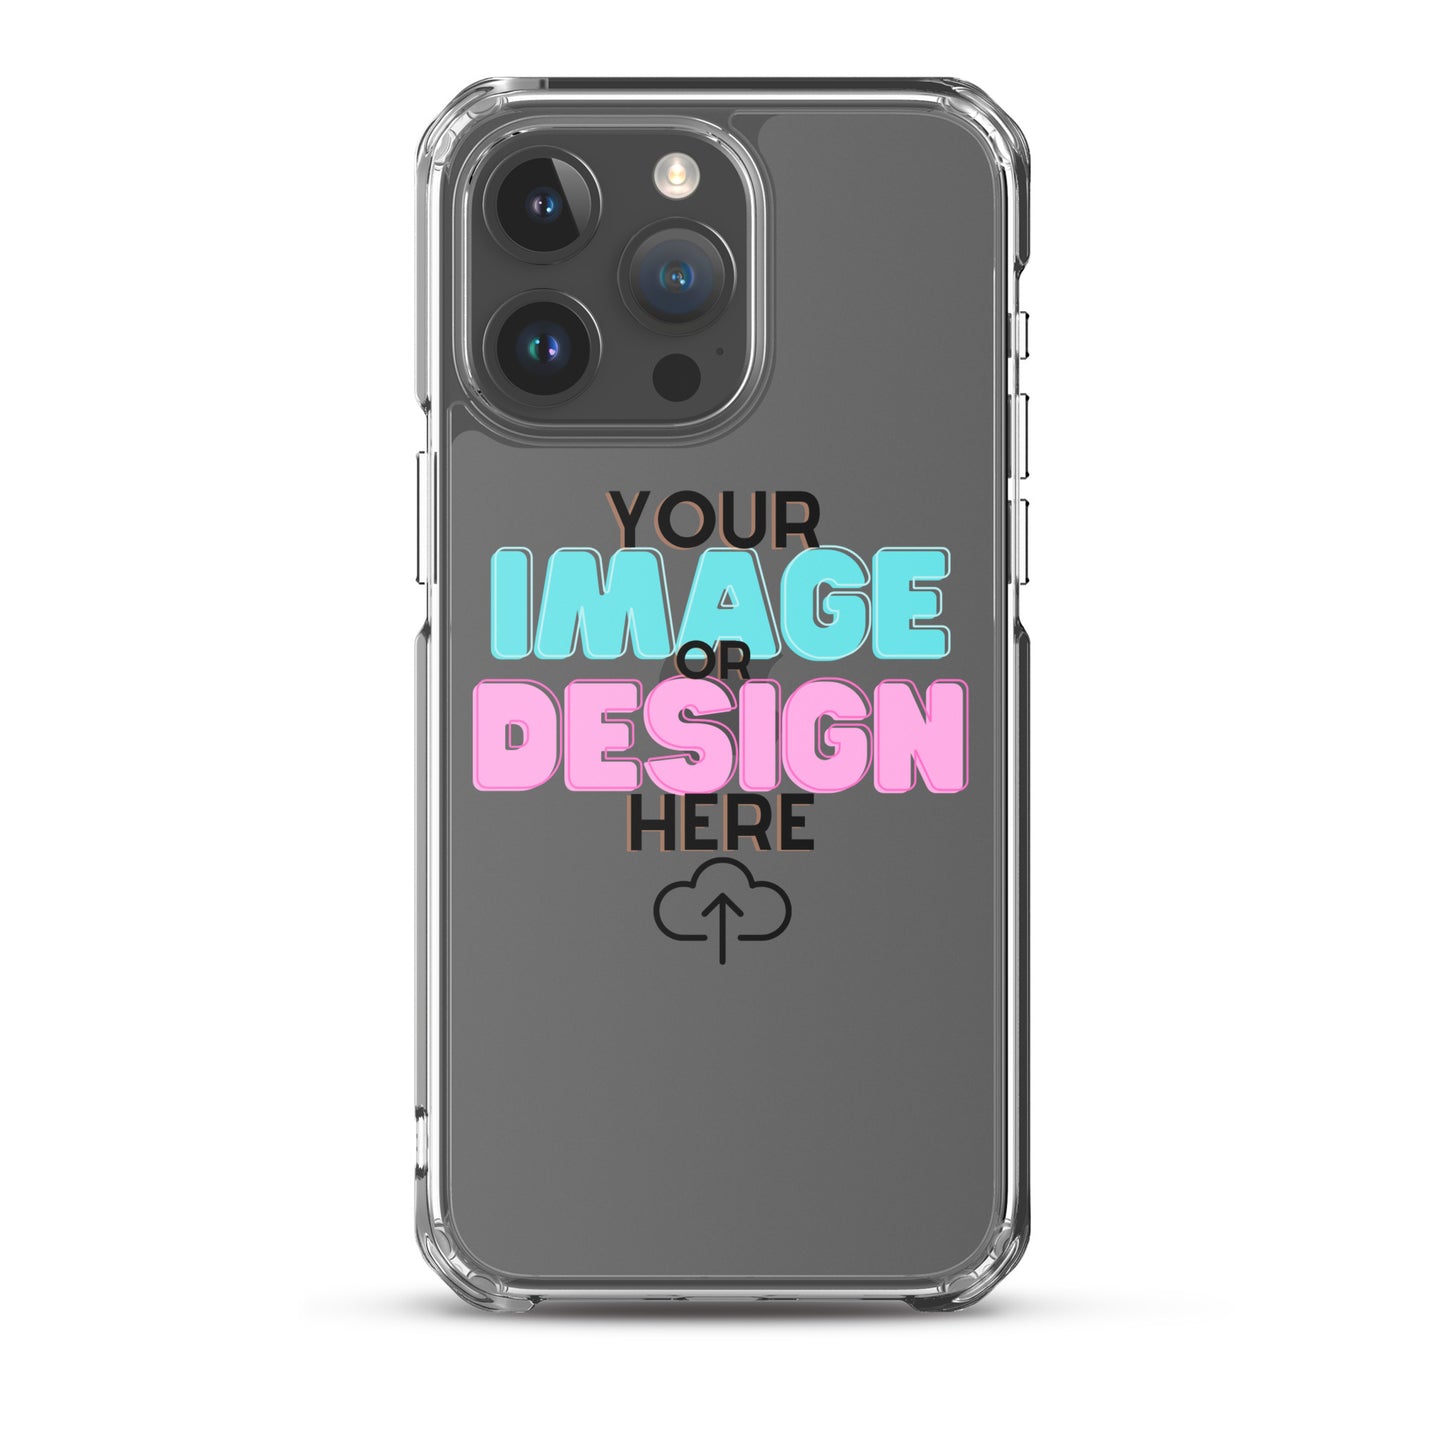 Customizable Iphone case